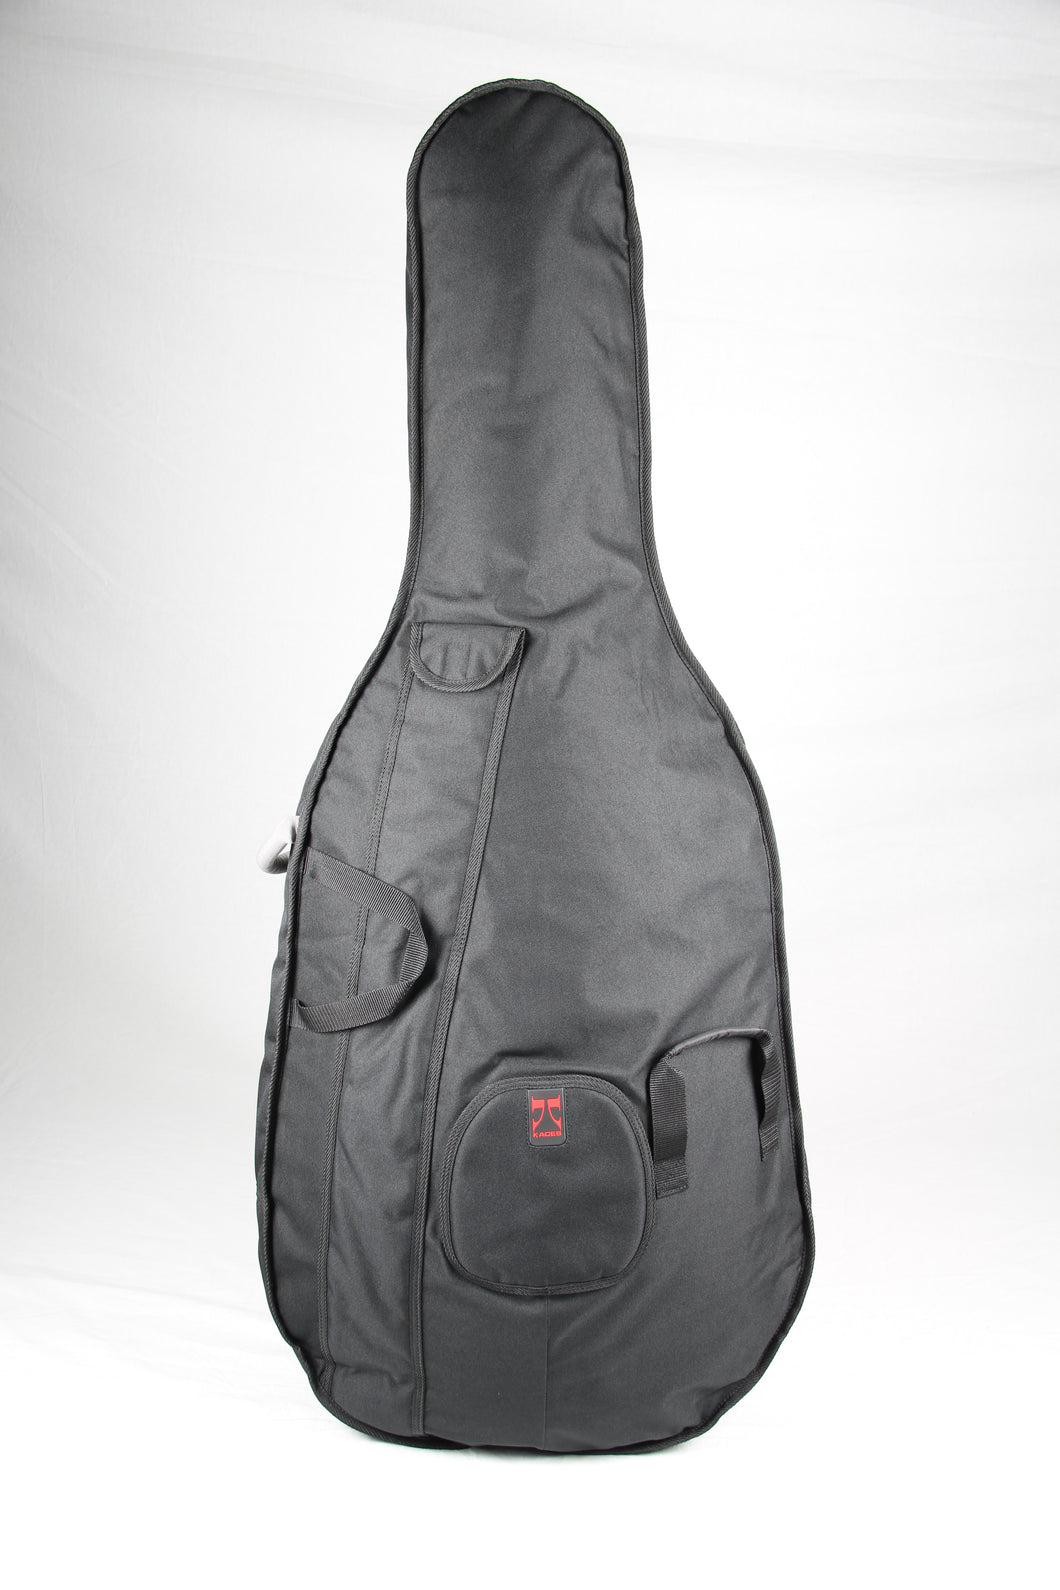 University Series 3/4 Size Upright Bass Bag